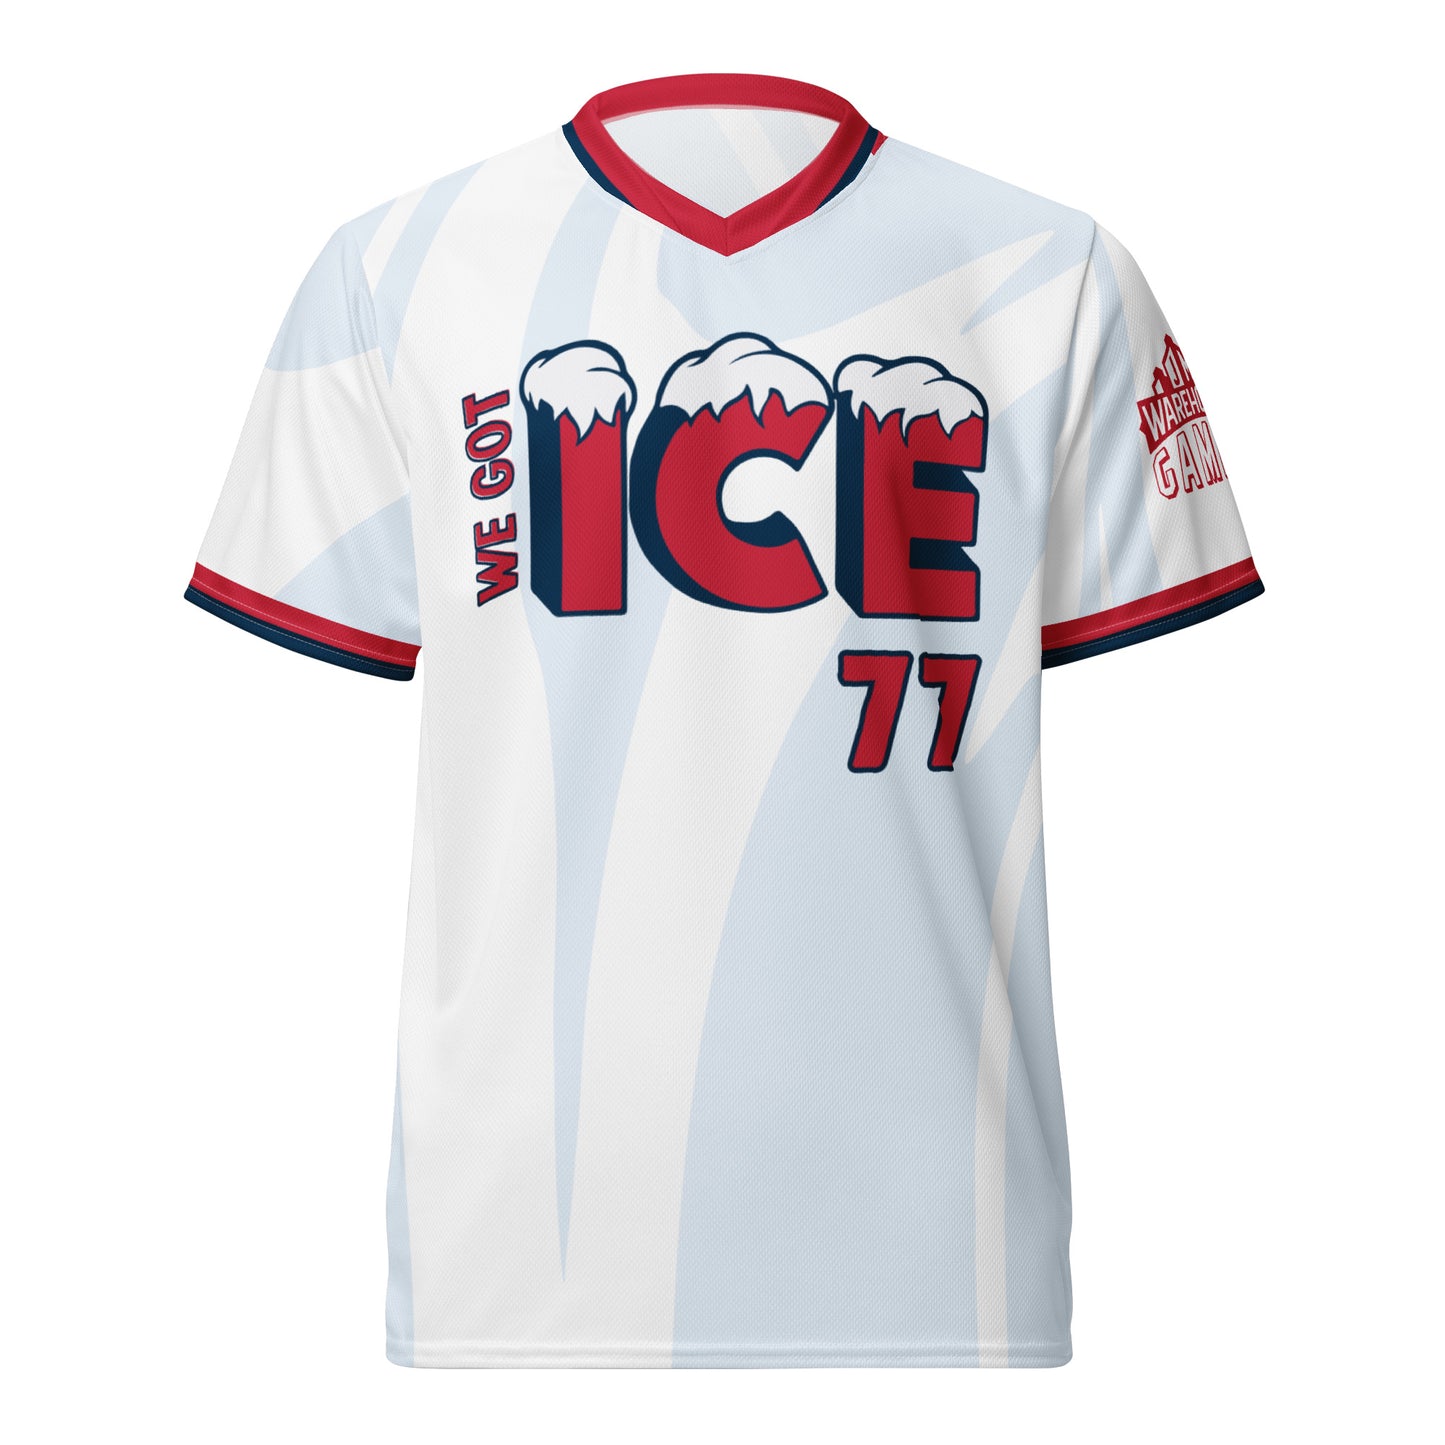 We Got Ice: "Zo" Home | Blitzball 3 Replica Jersey